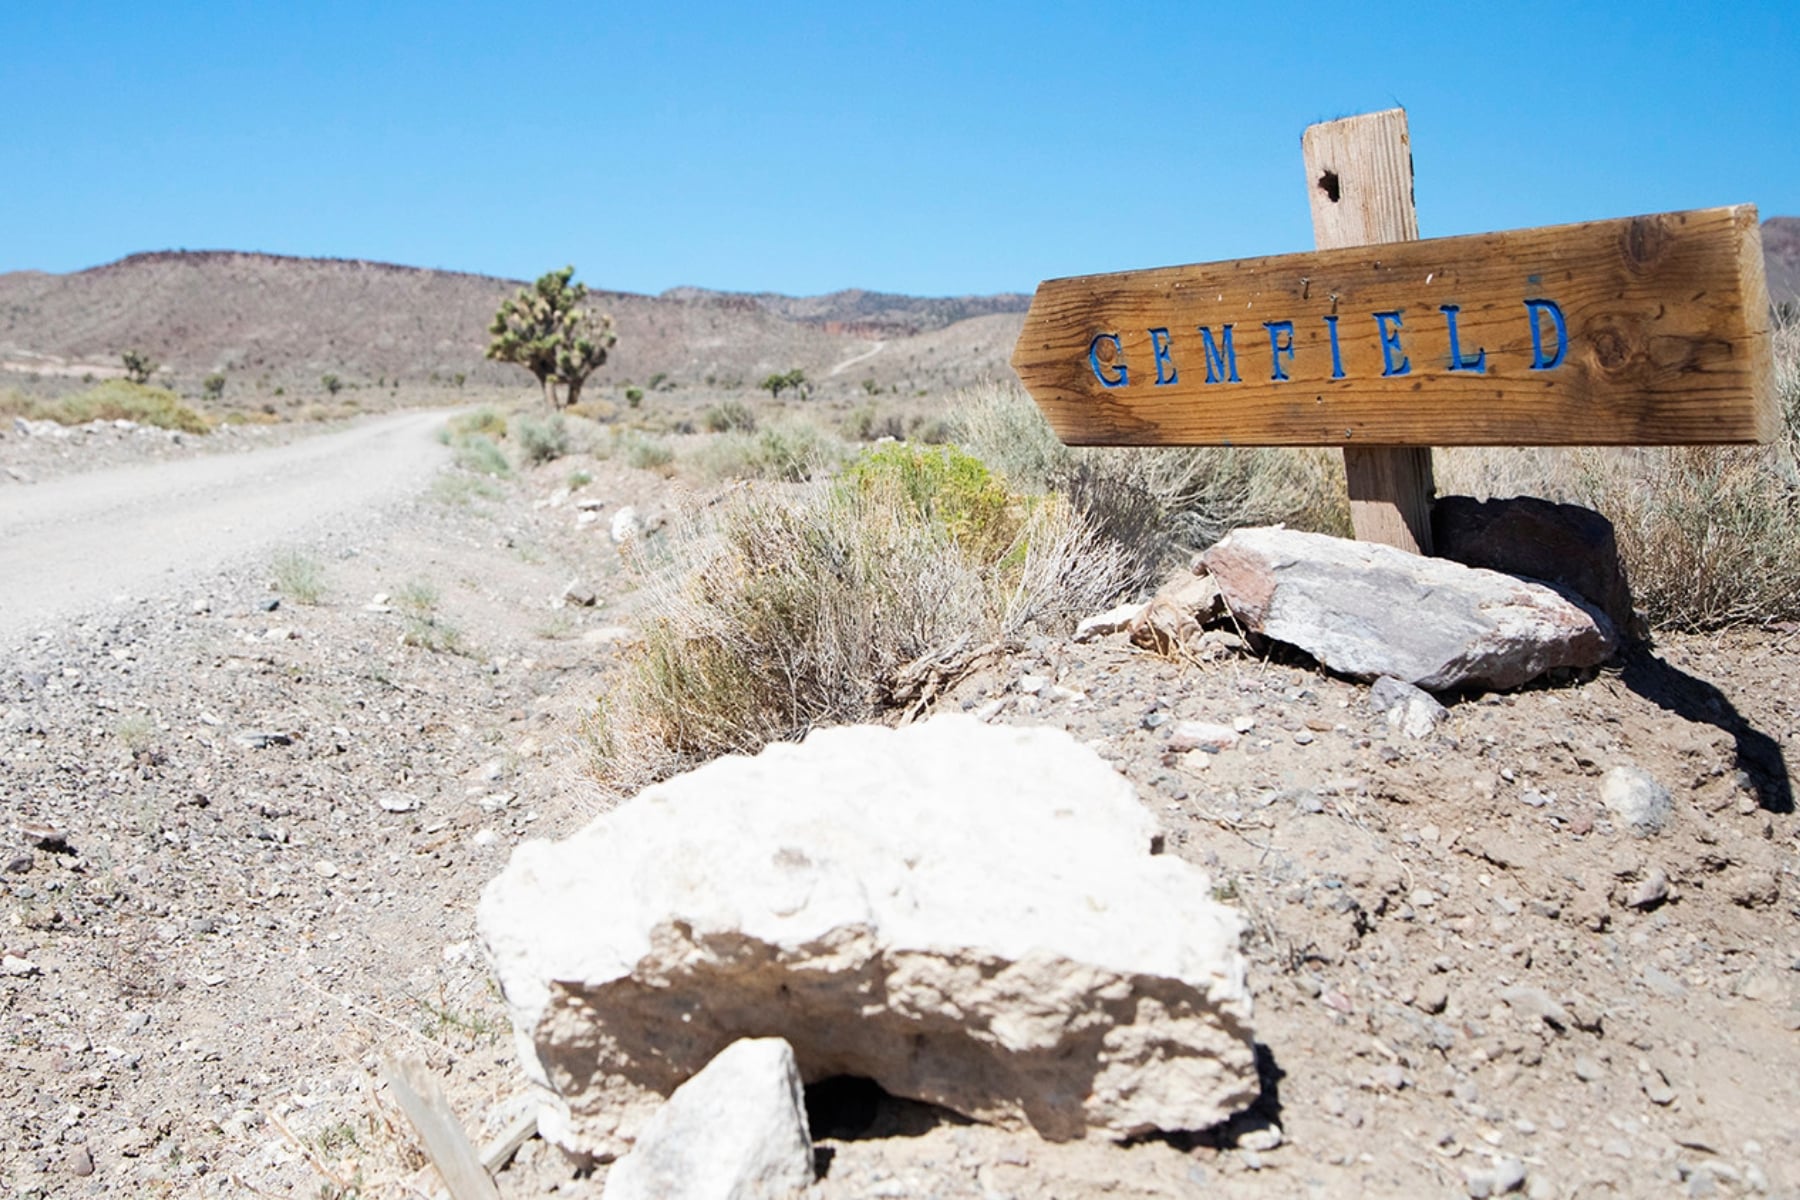 Gemfield Nevada sign on desert road